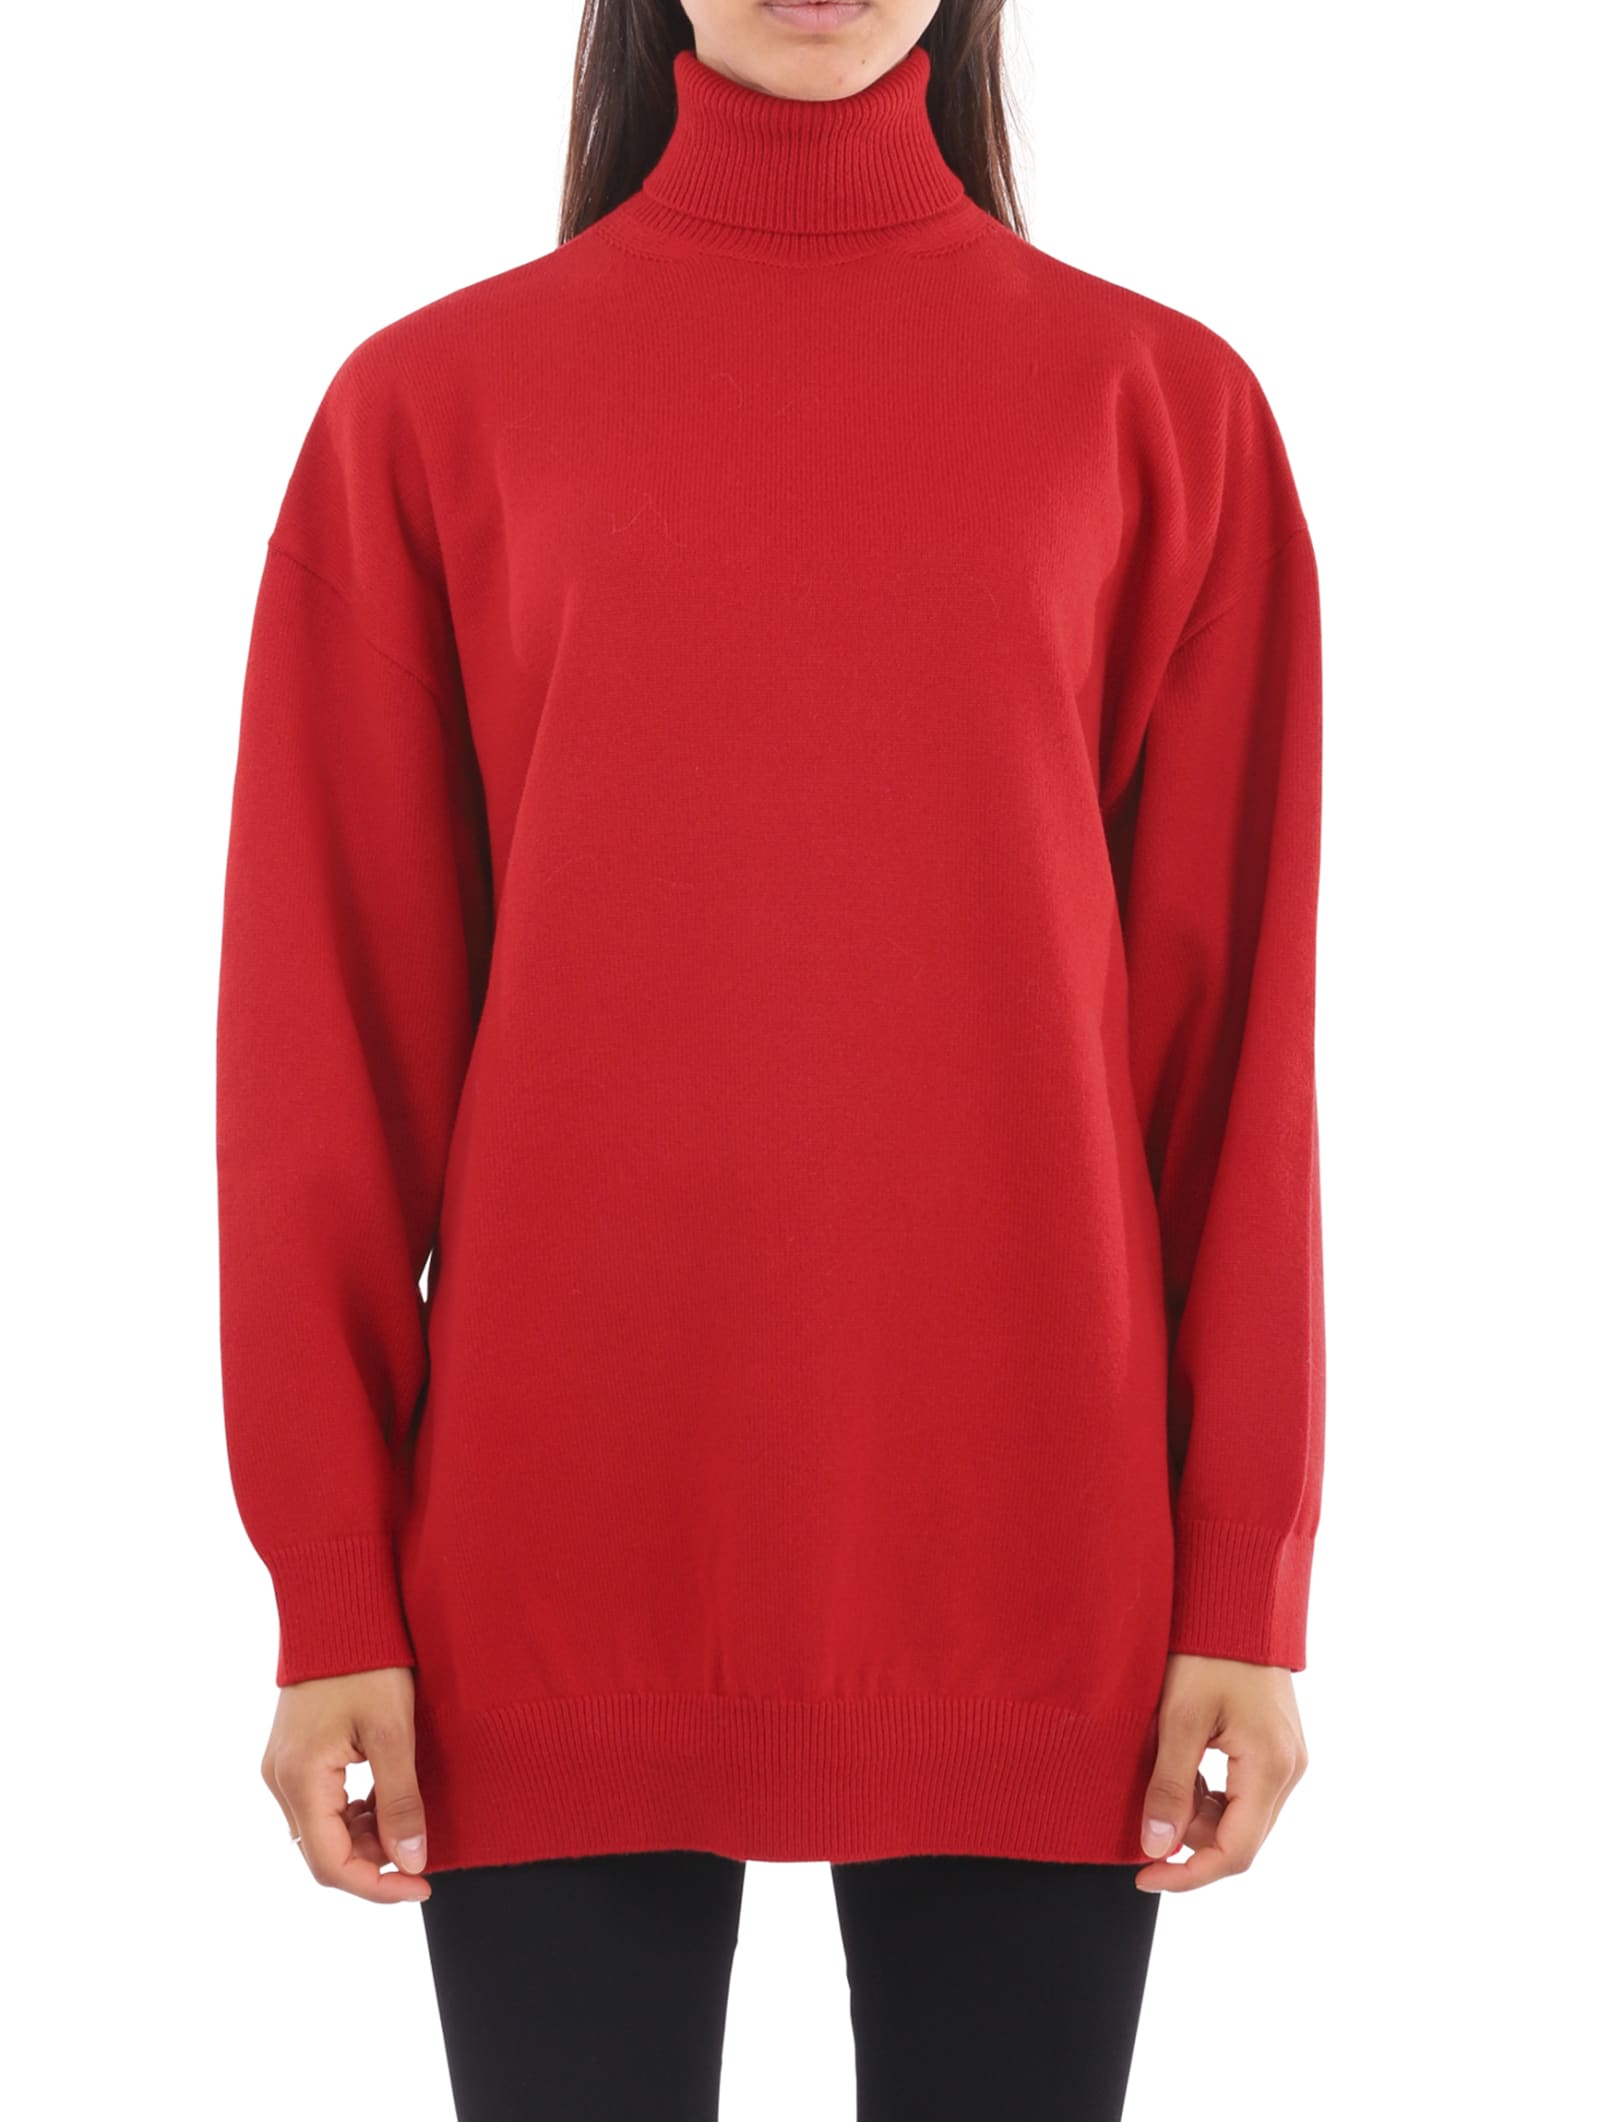 balenciaga sweater red